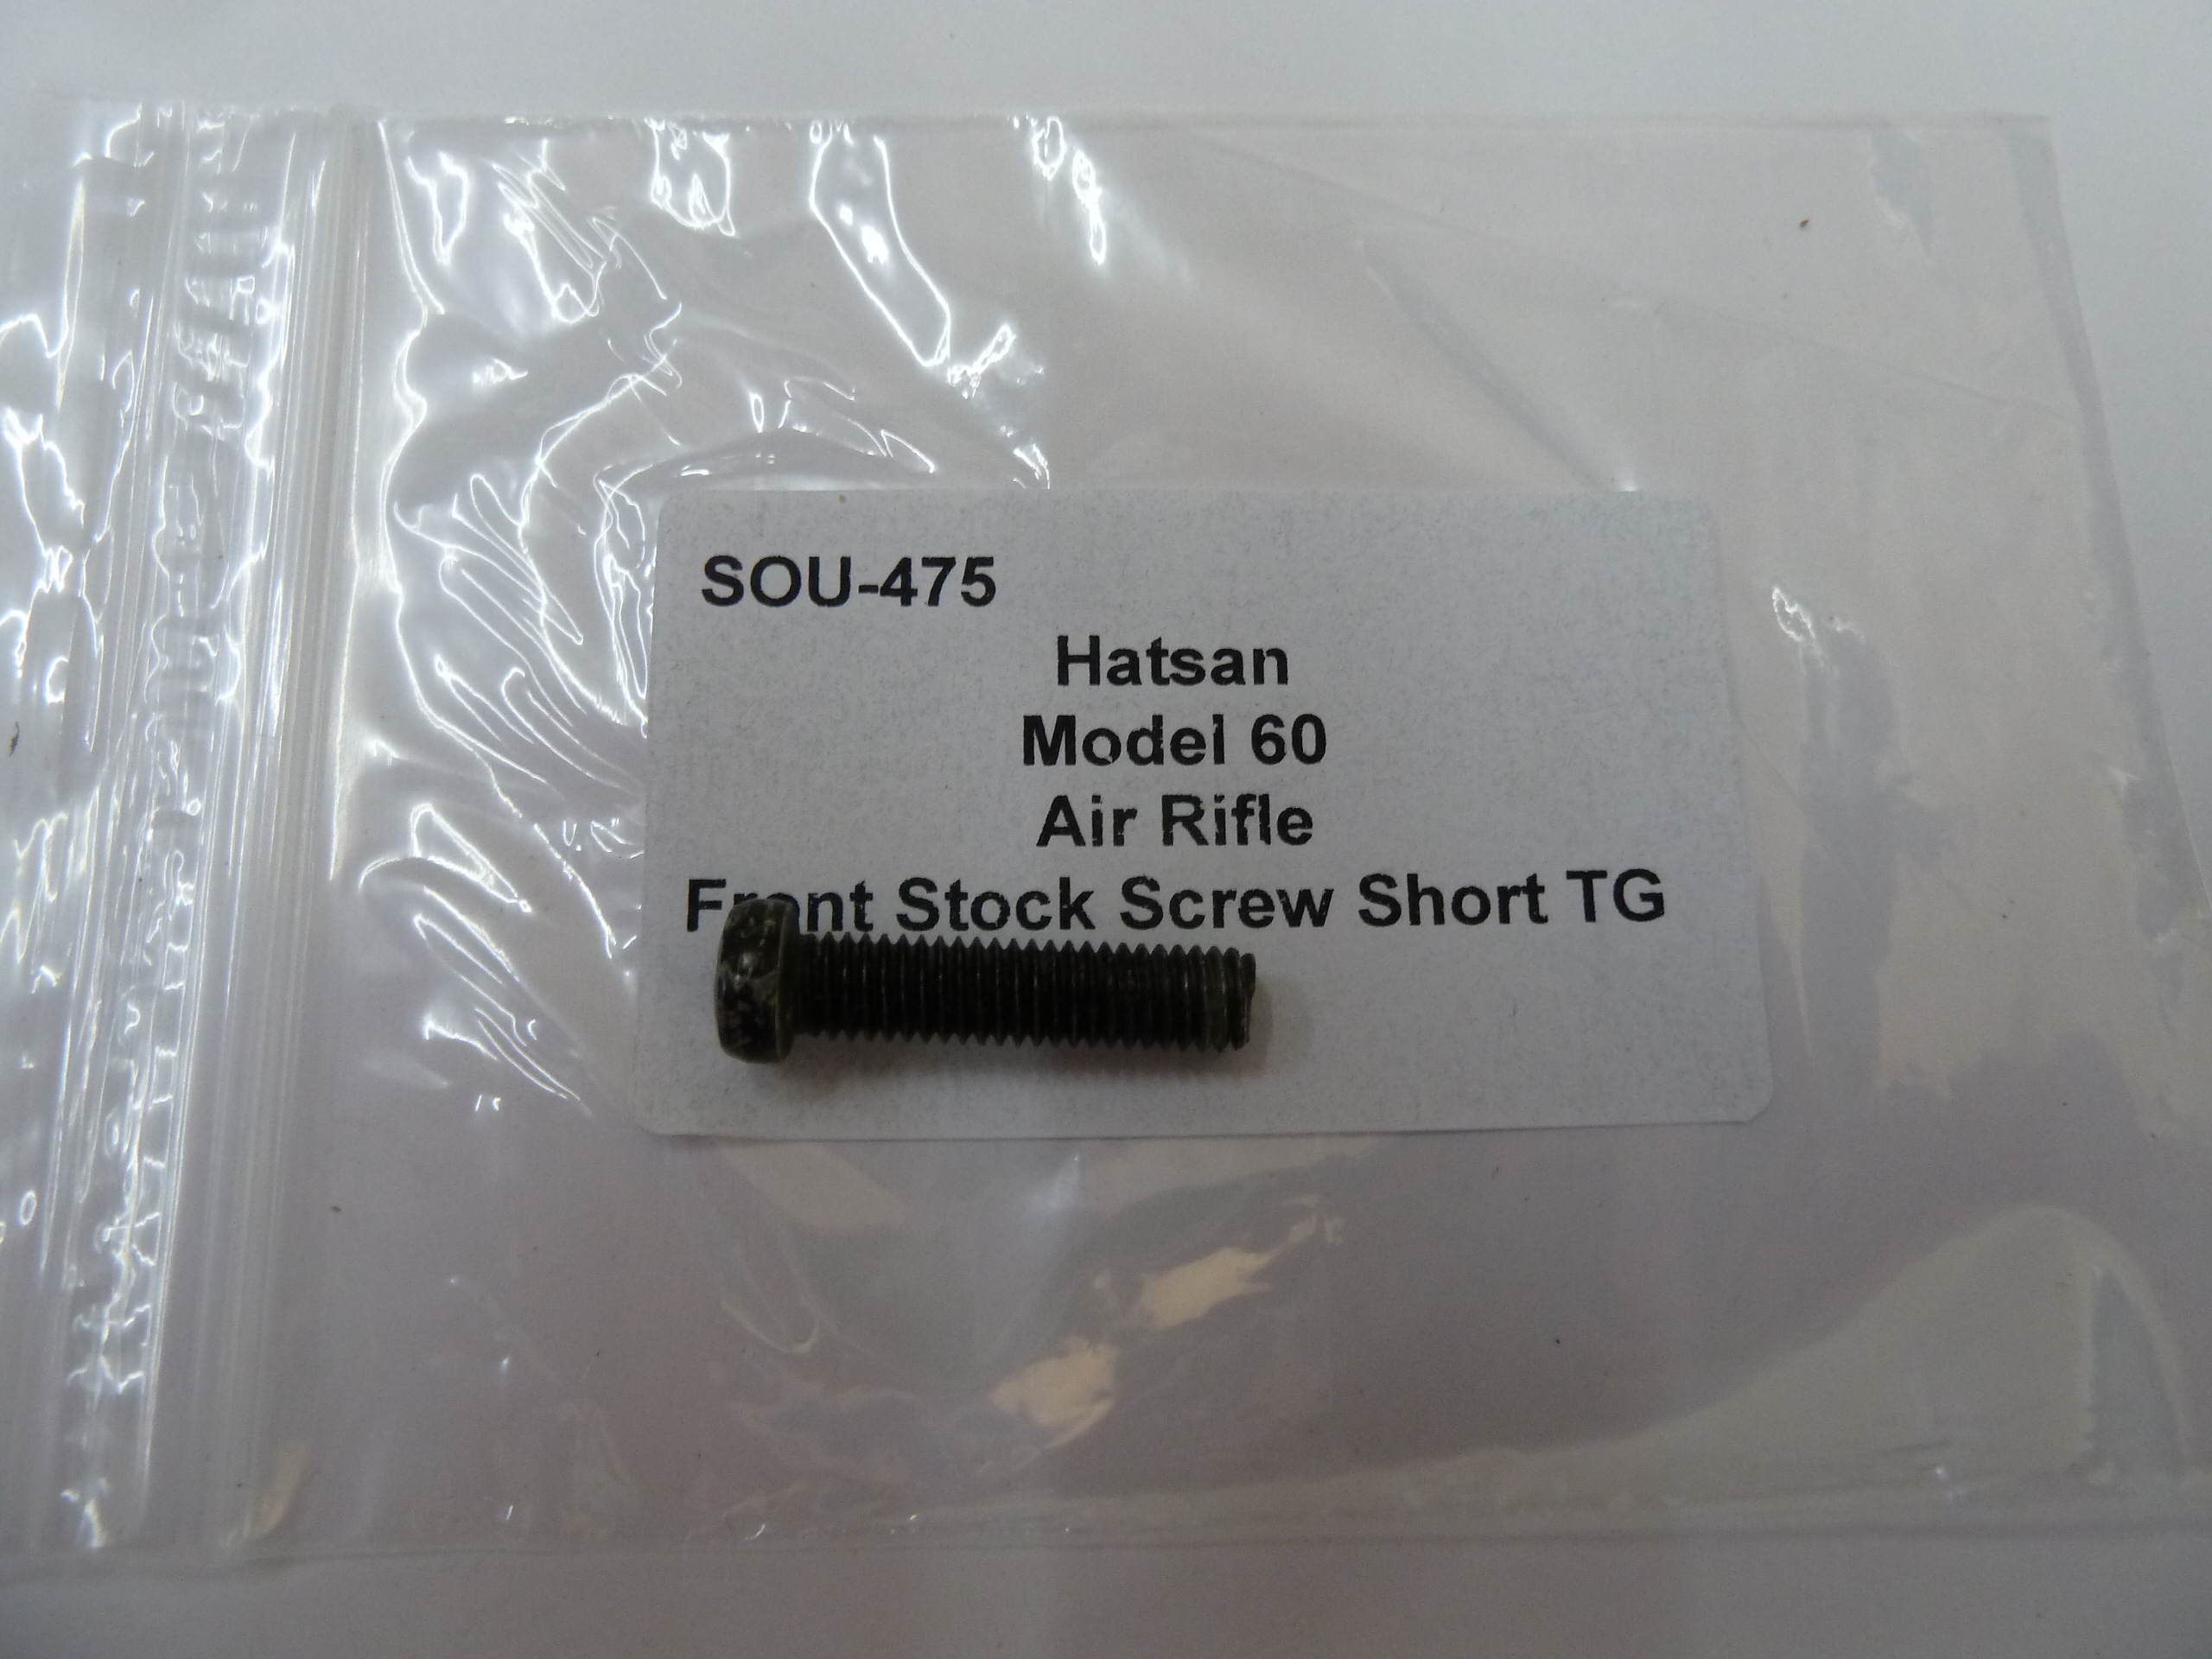 Hatsan Model 60 front stock screw short TG